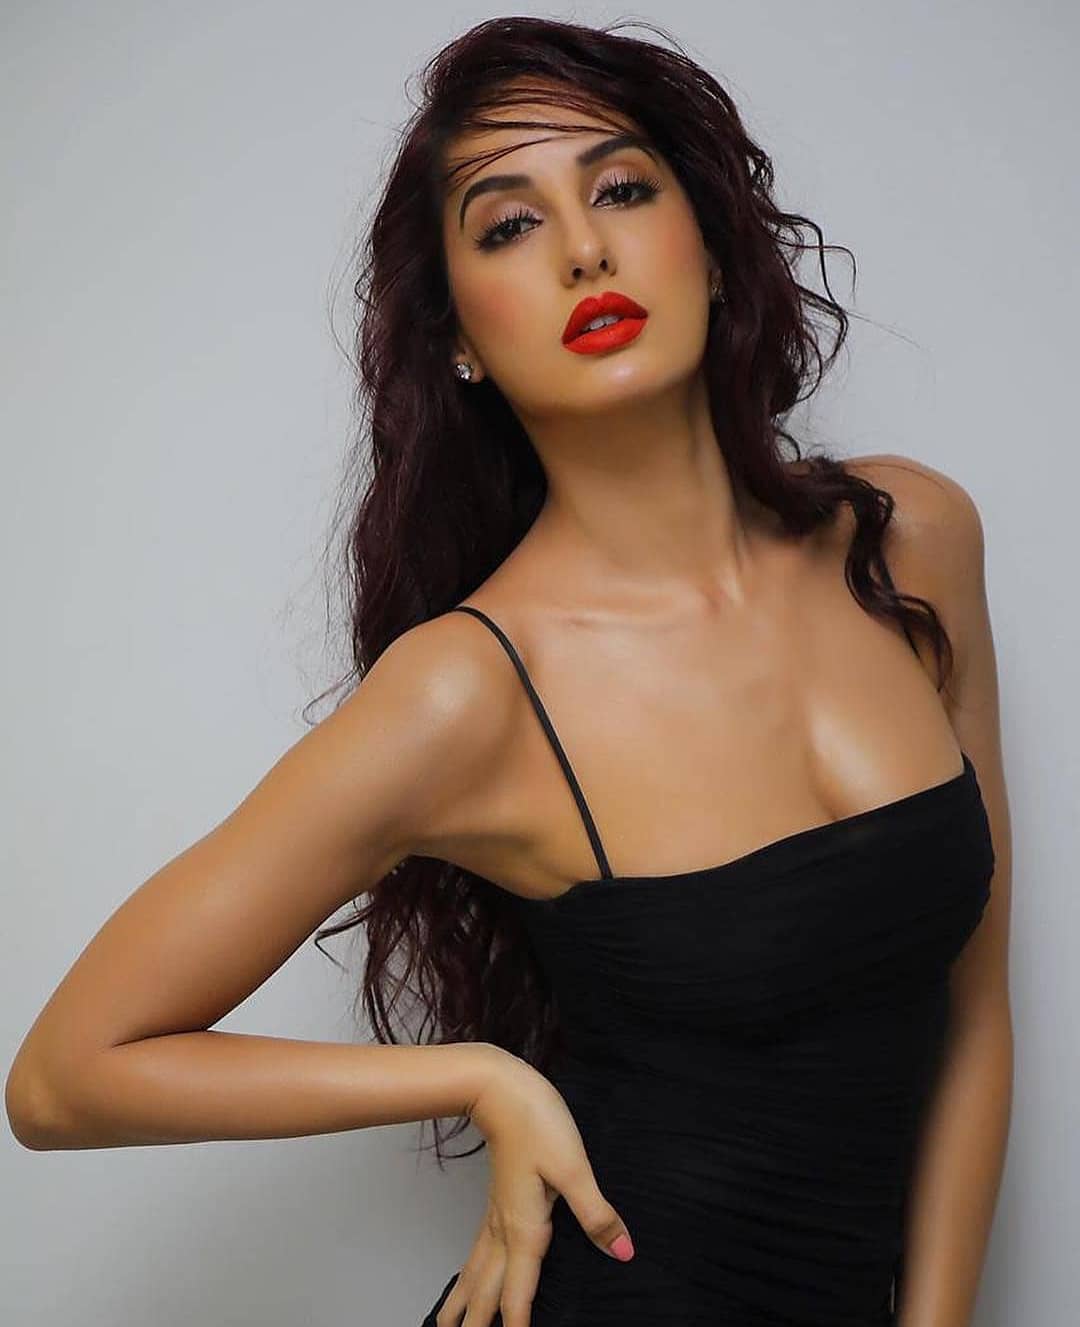 Nora Fatehi Photo Shoot In A Bright Red Lipstick